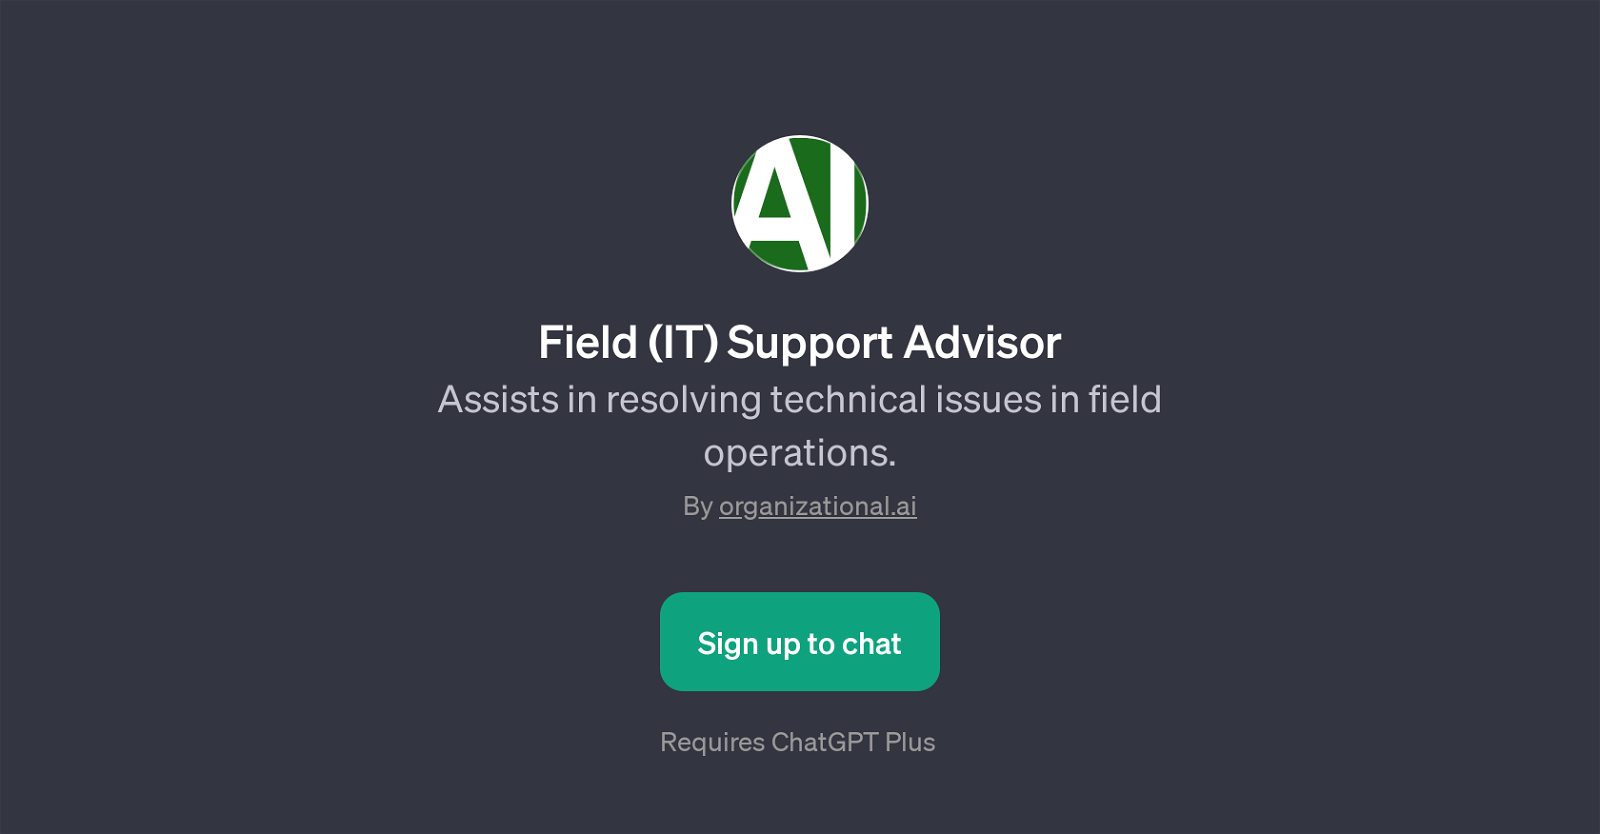 Field (IT) Support Advisor website